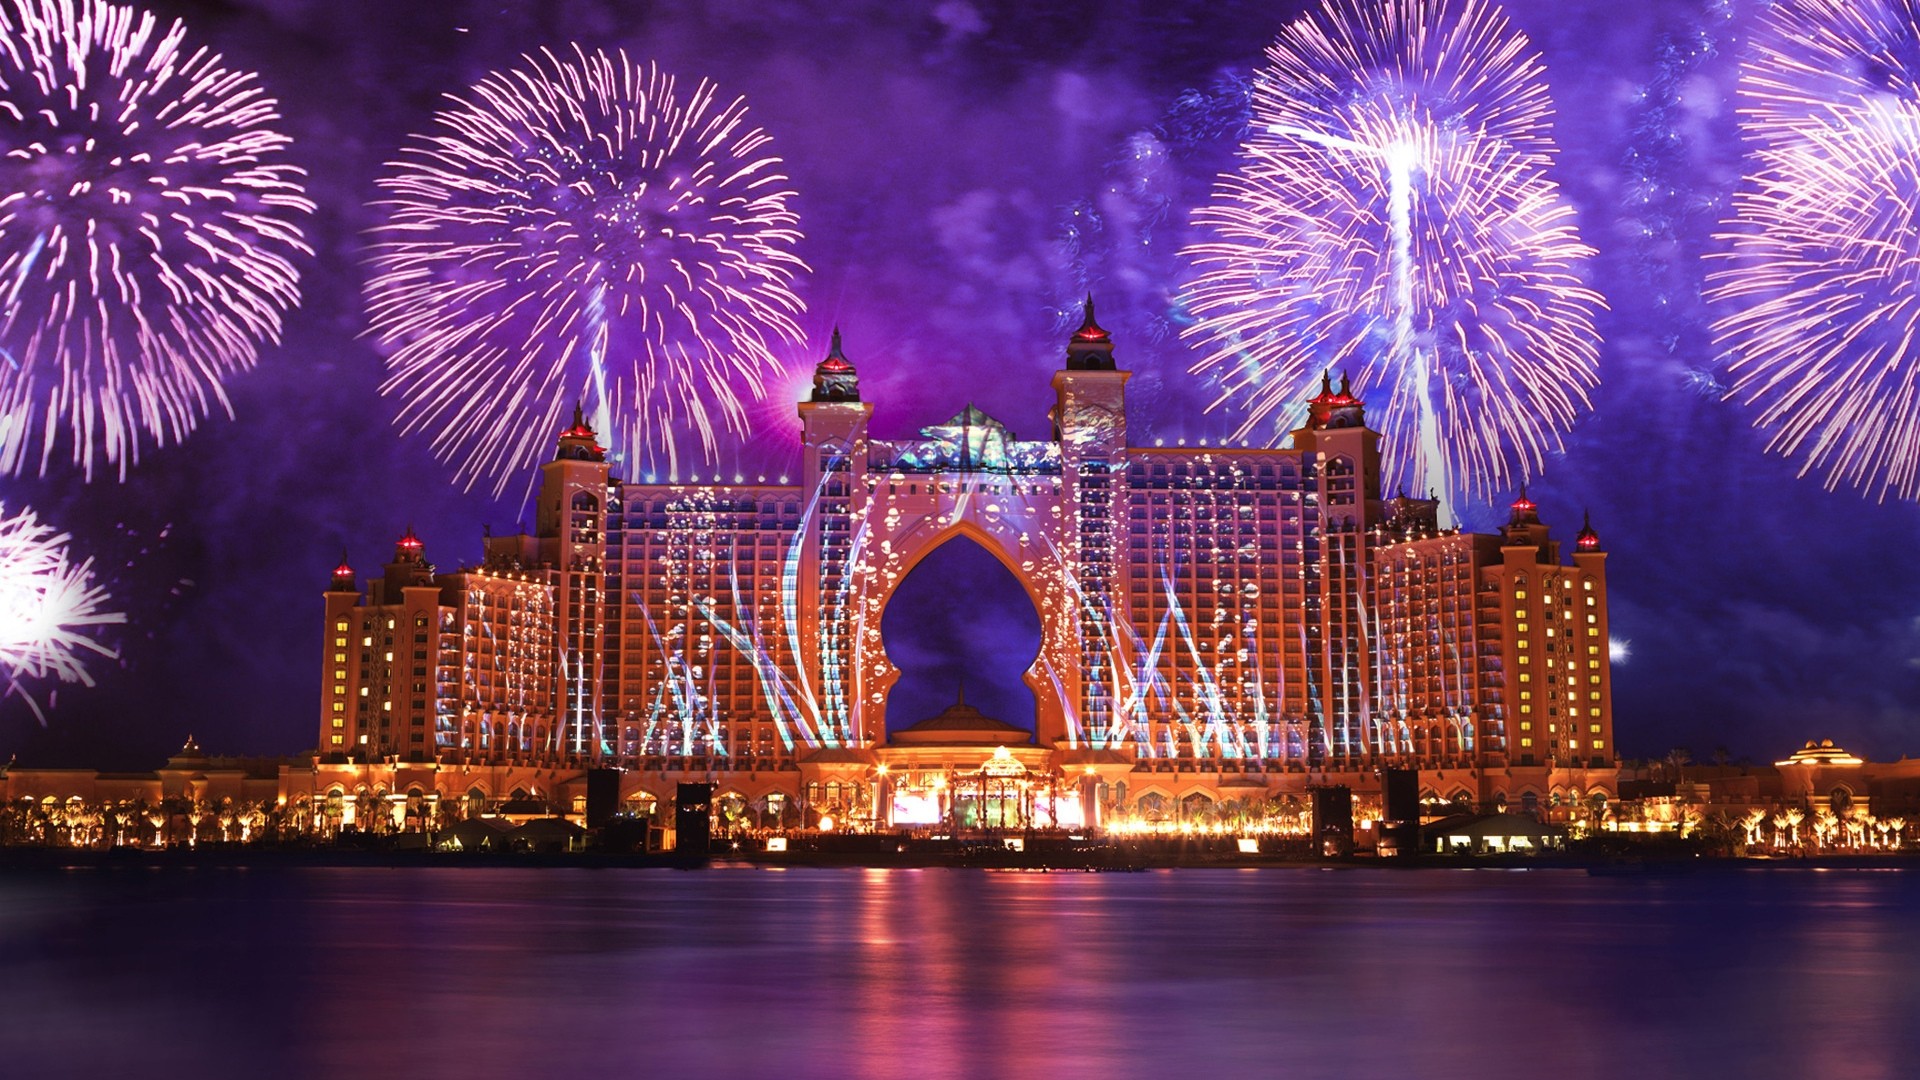 New Year Fireworks 2019 Atlantis, Palm Jumeirah Fireworks Dubai, UAE